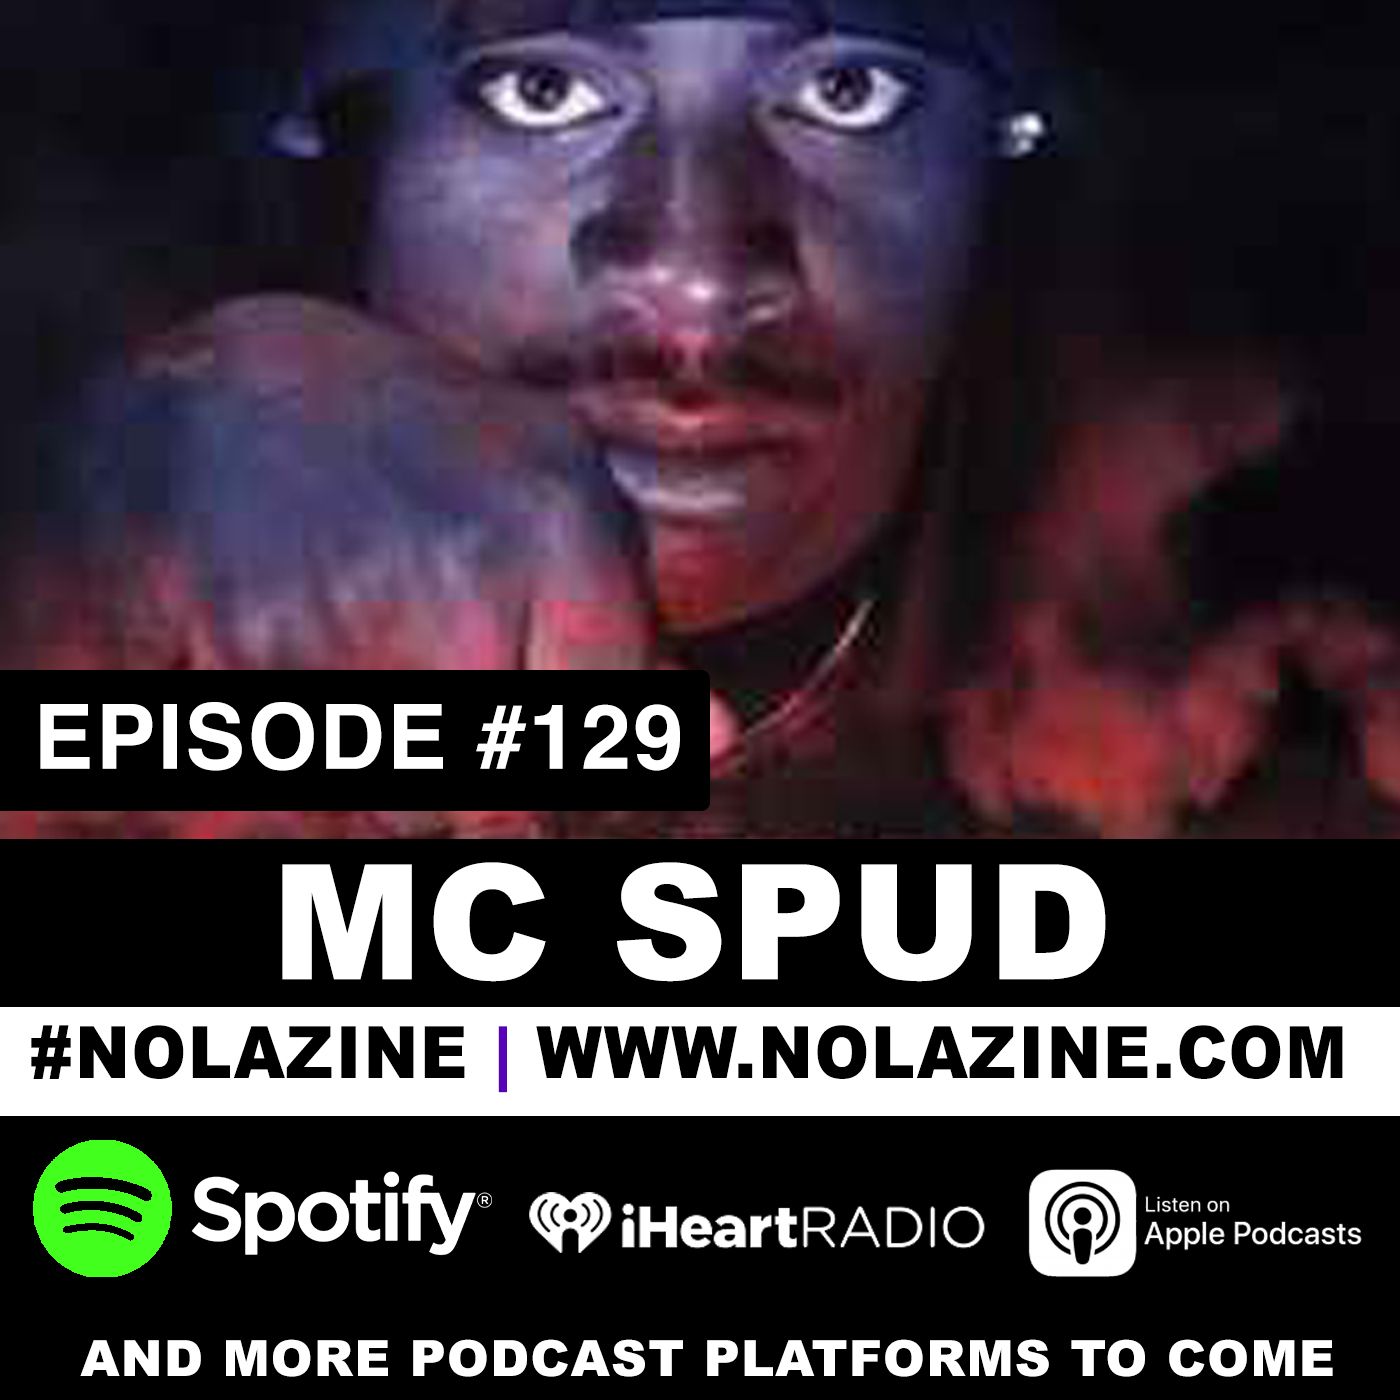 EP: 129 Featuring MC Spud